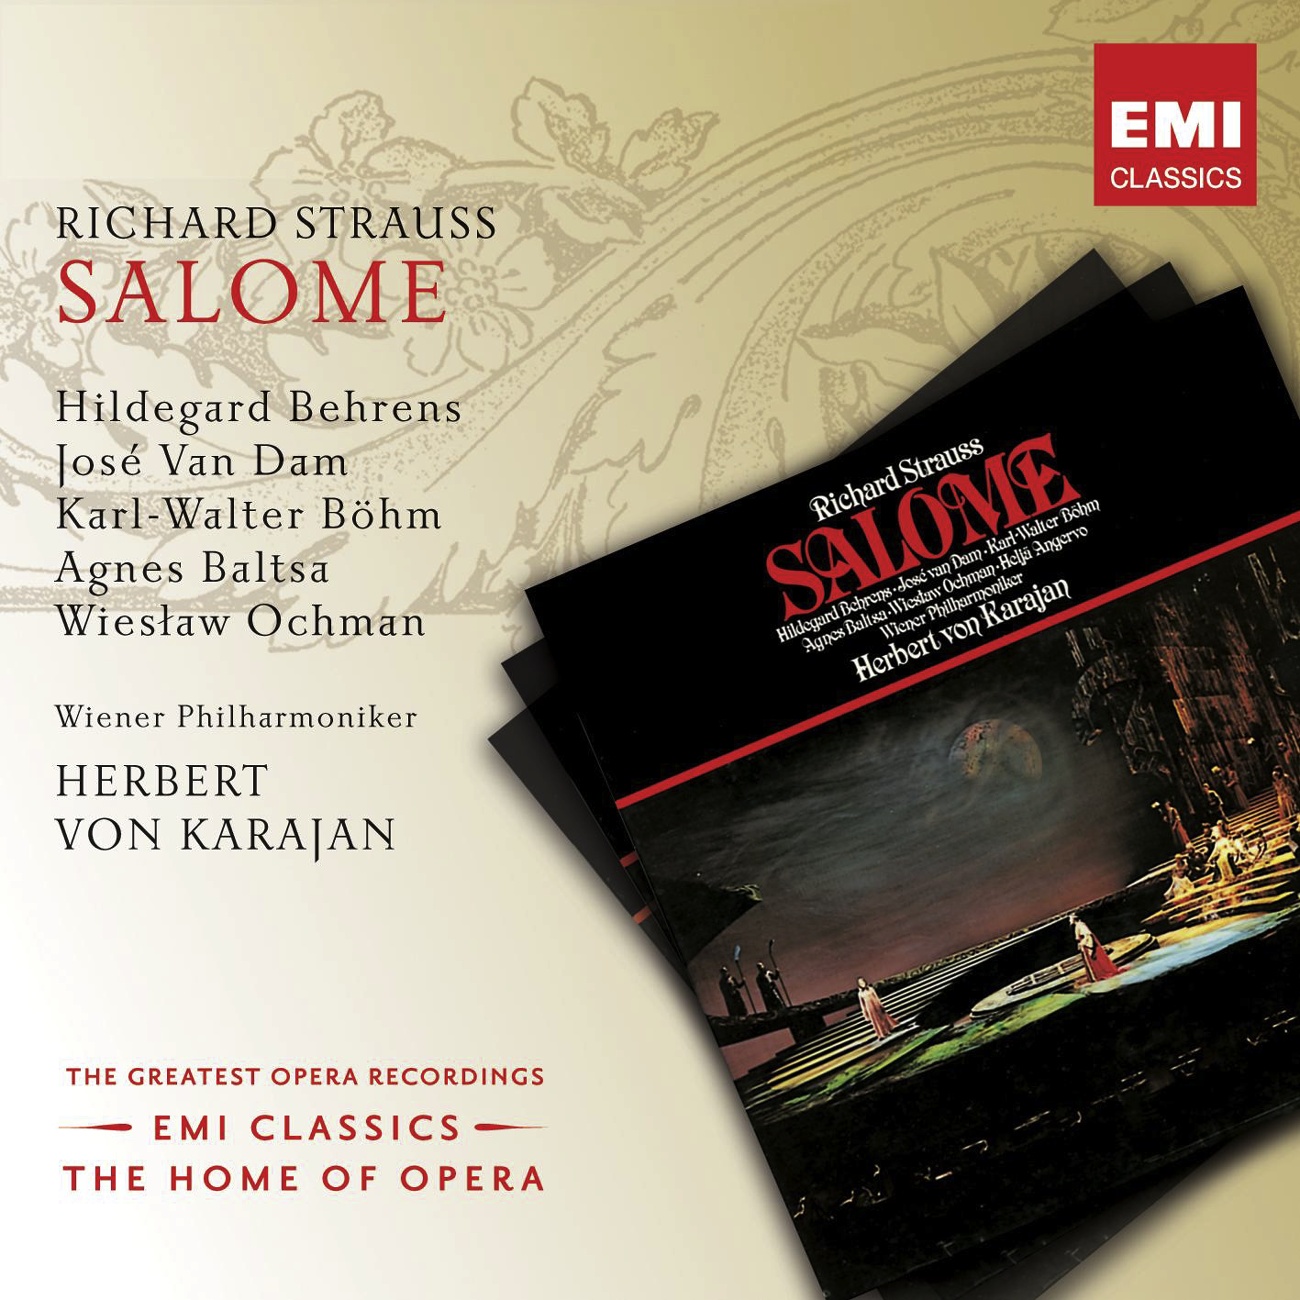 Salome 1999 Digital Remaster: Tanz fü r mich, Salome Herodes Herodias Salome Jochanaan